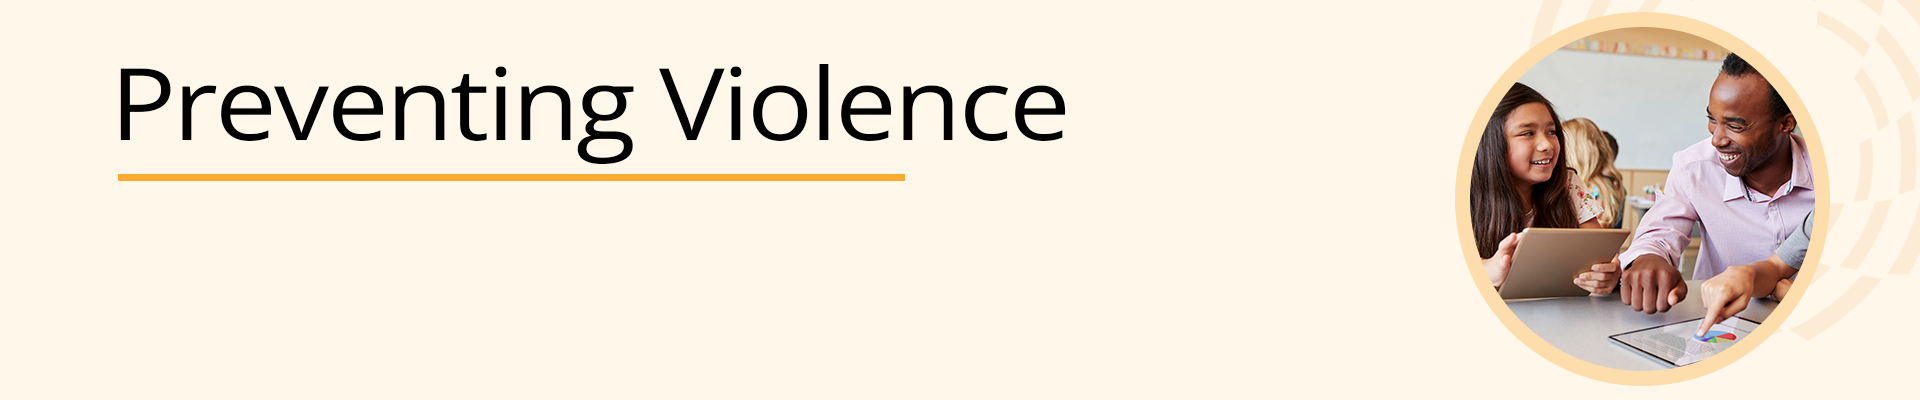 RethinkEd - Header Banner - Preventing Violence - 1920x400